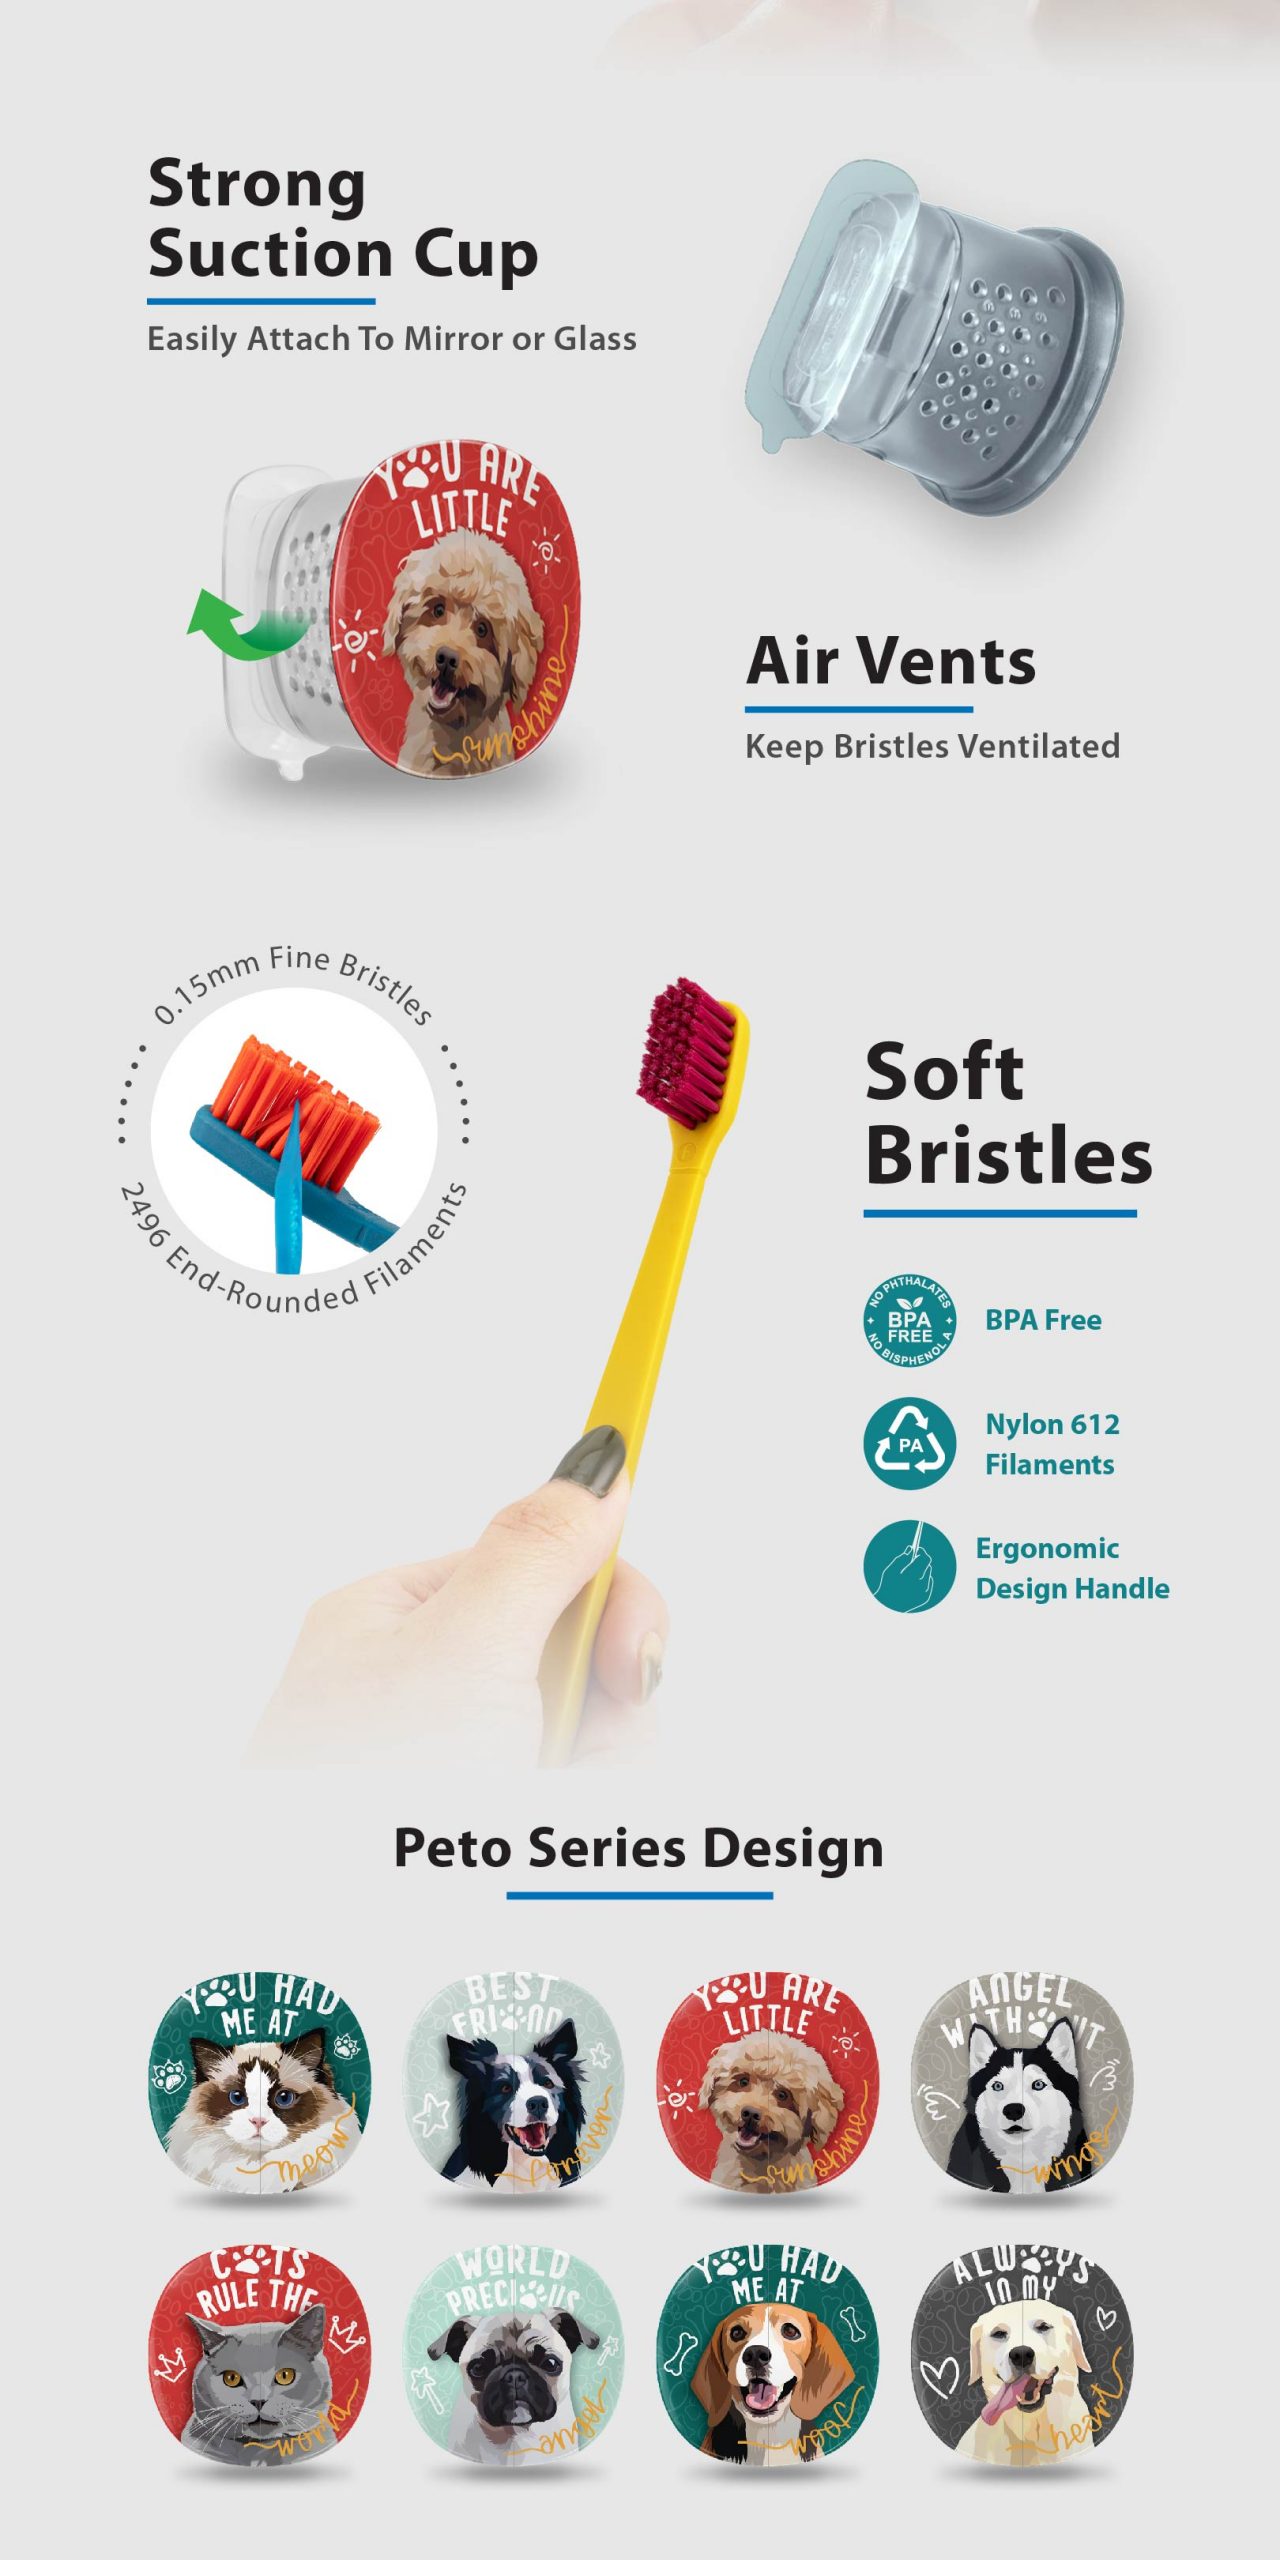 Peto-Designs-Product-Description_02-scaled.jpg